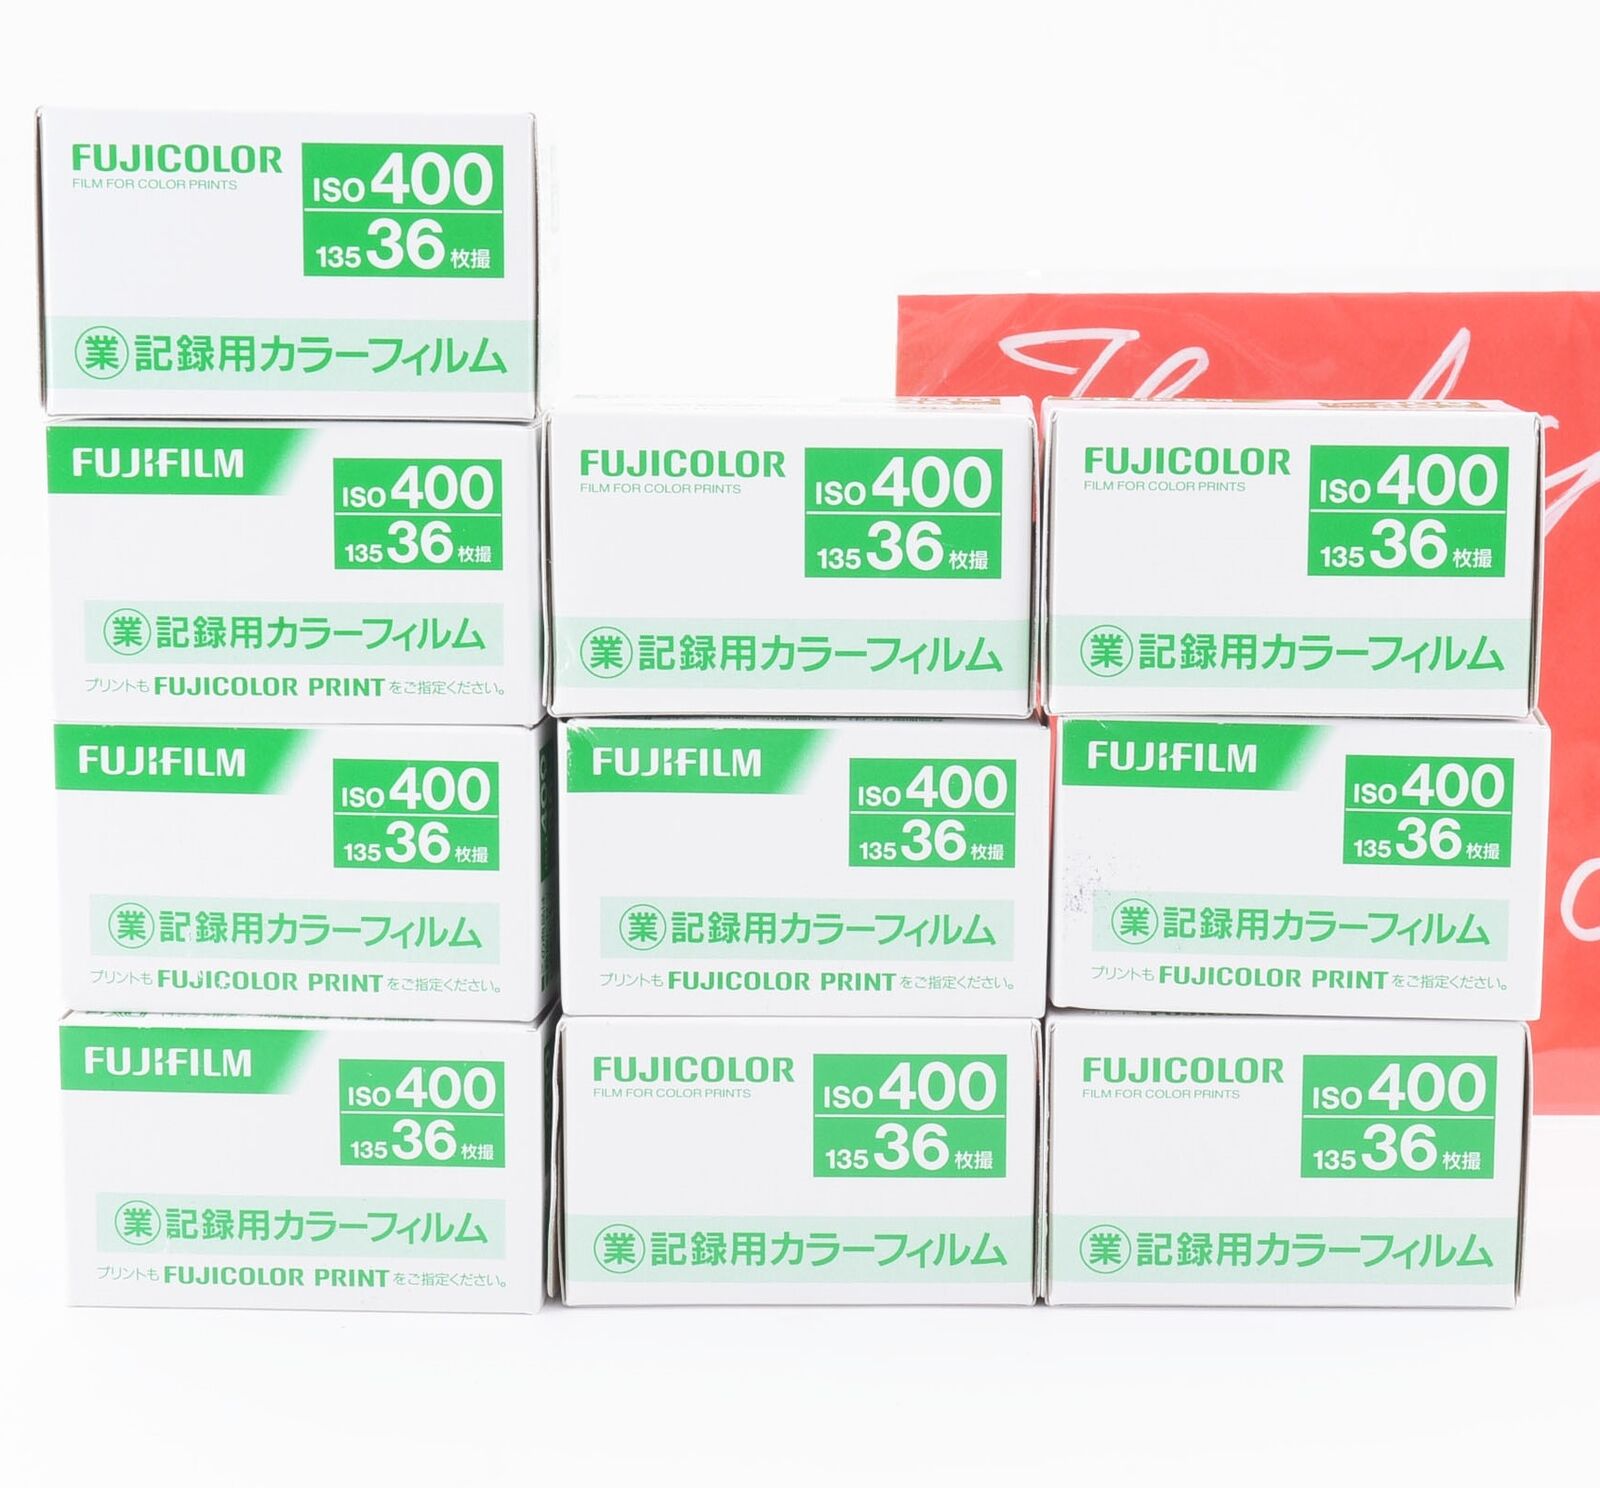 10×FujiFilm Fujicolor Industrial film ISO 400 36ex 35mm Expired 2013 From JAPAN